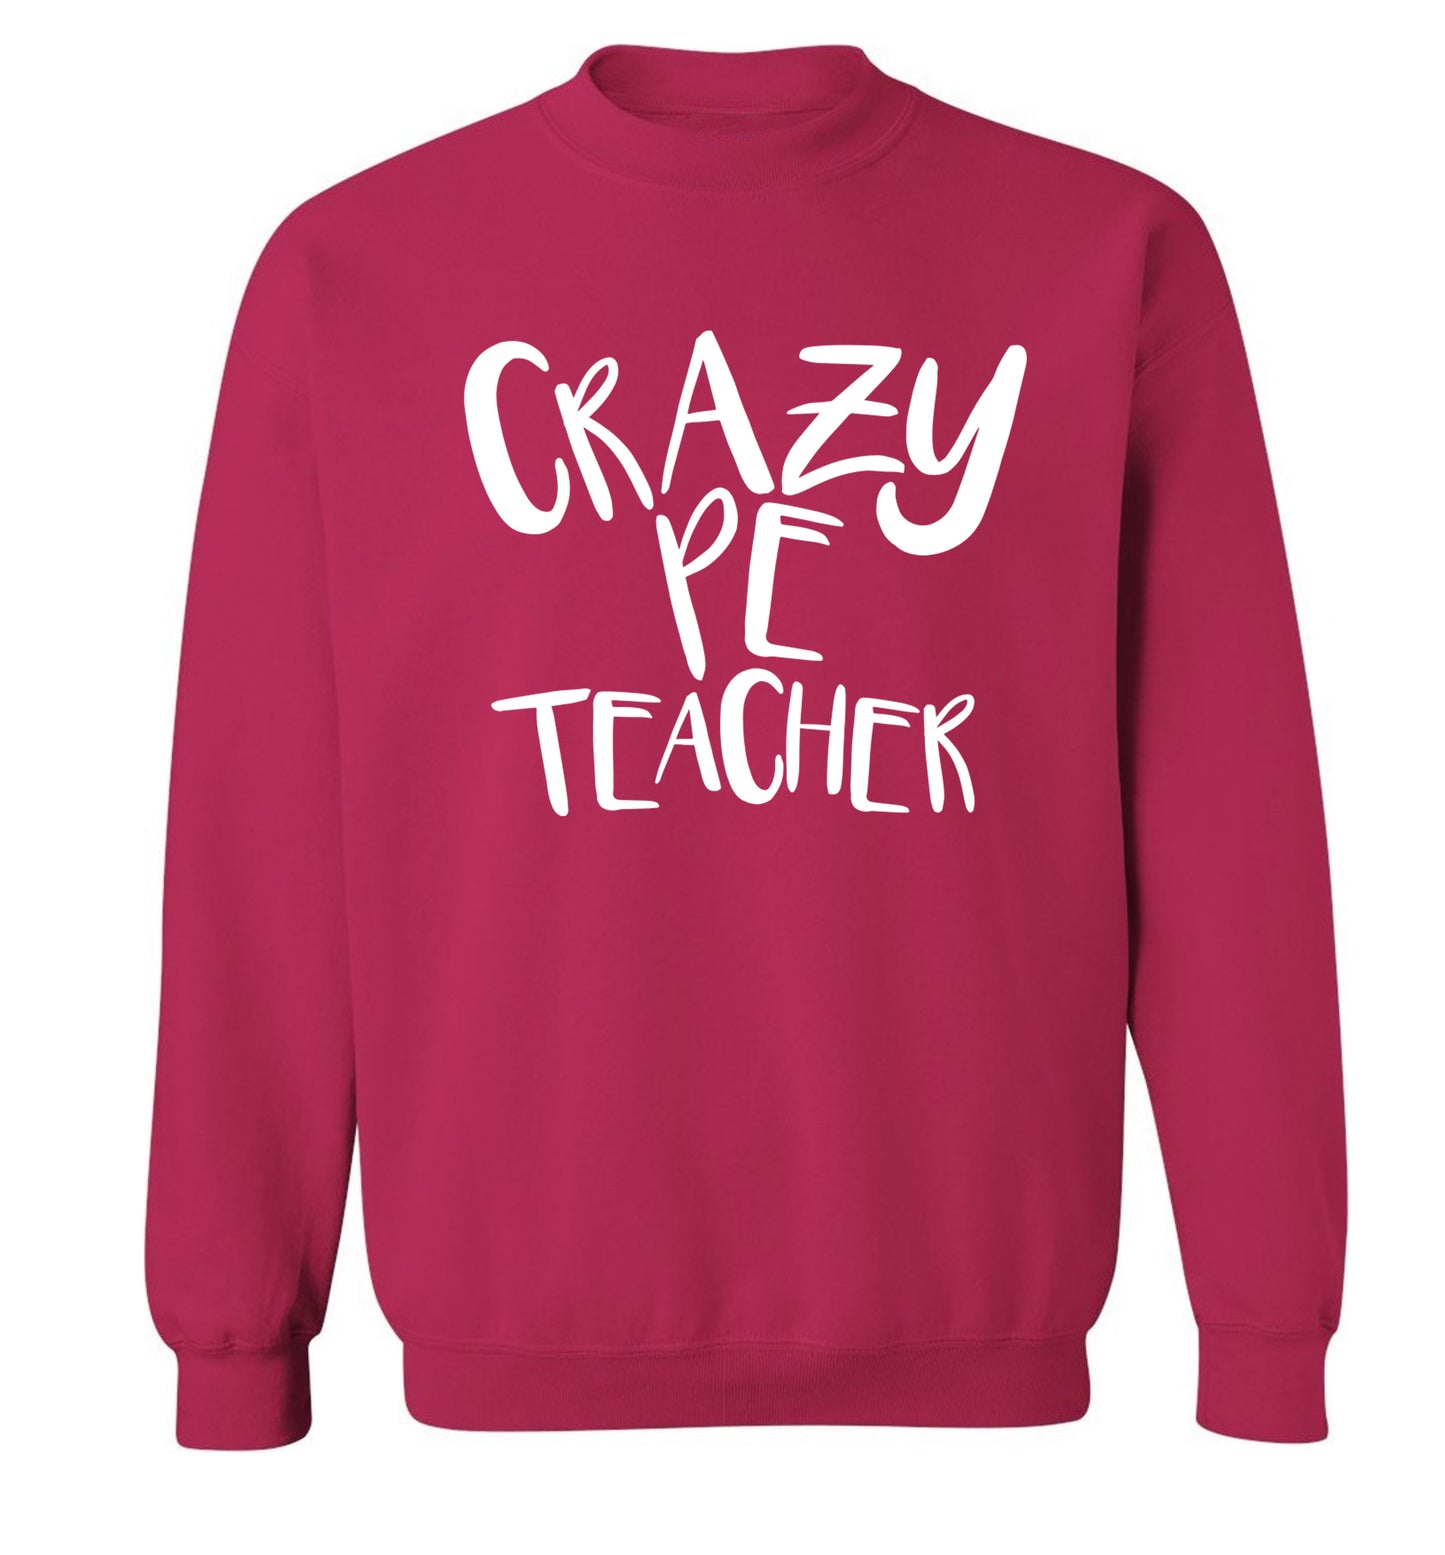 Crazy PE teacher Adult's unisex pink Sweater 2XL